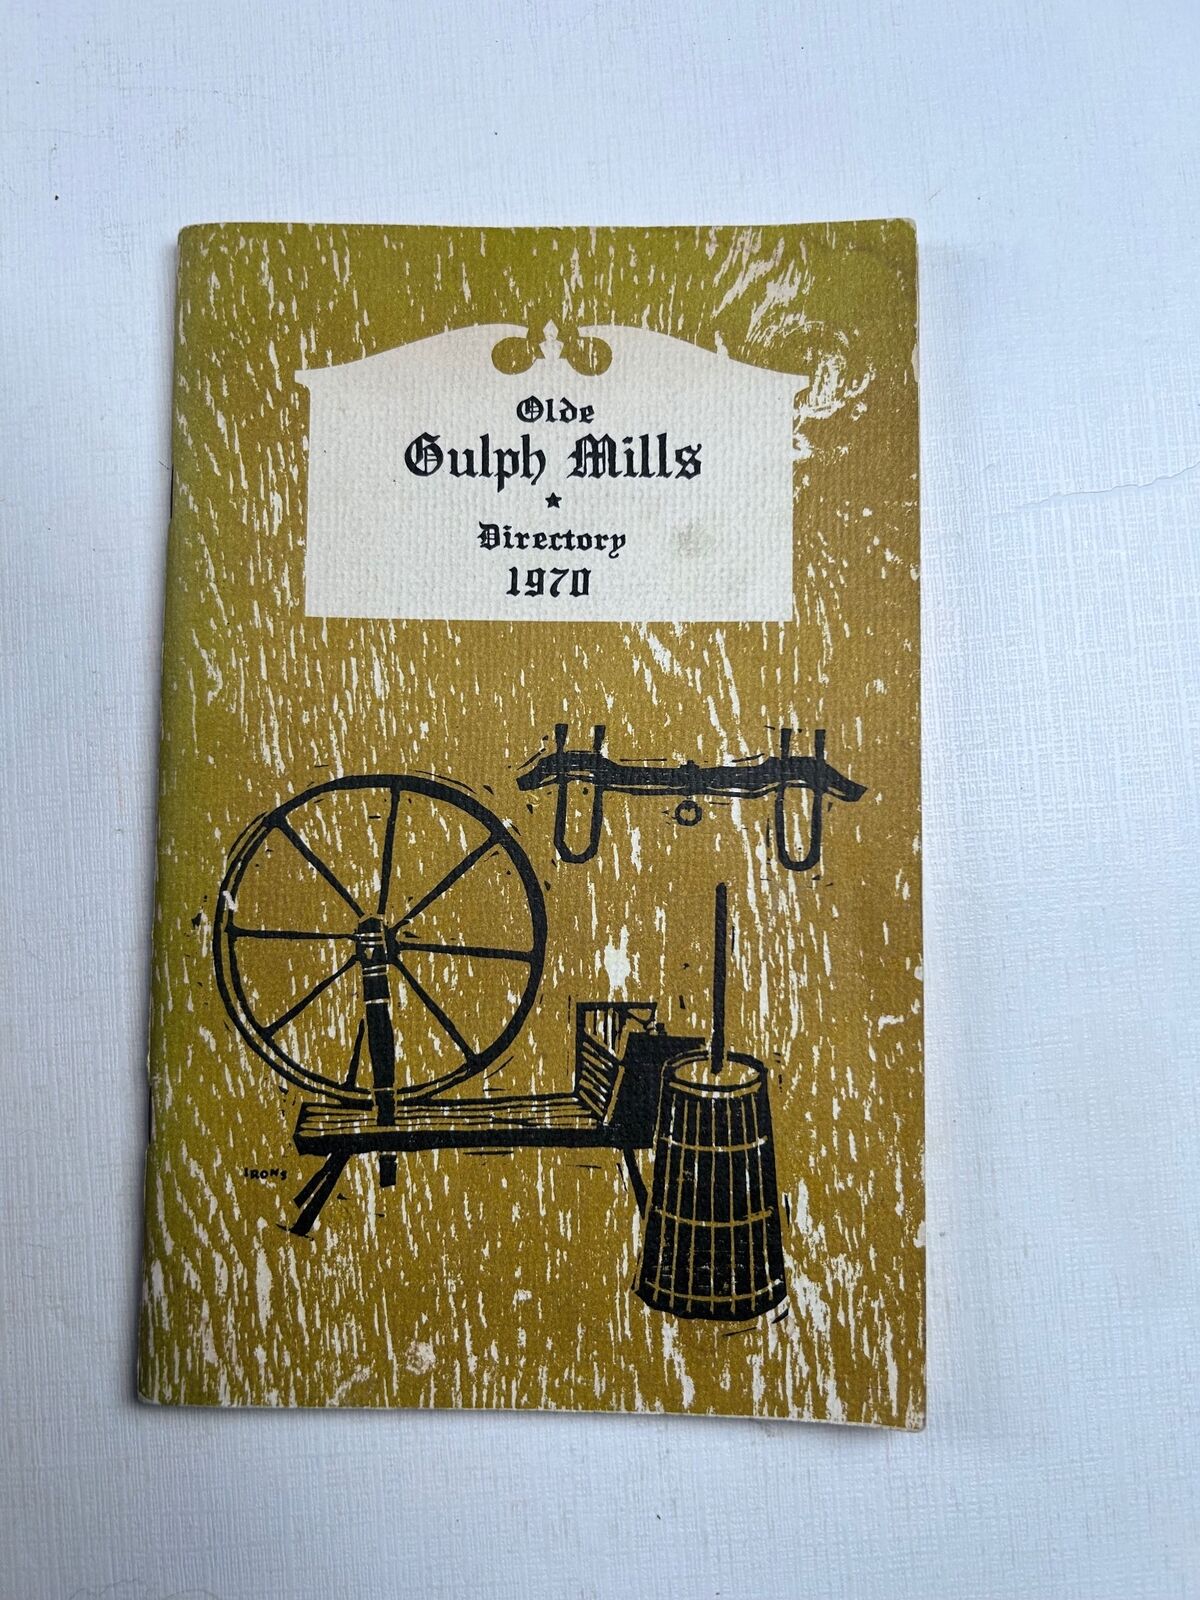 Olde Gulph Mills Directory 1970 PA King of Prussia Conshohocken Radnor 